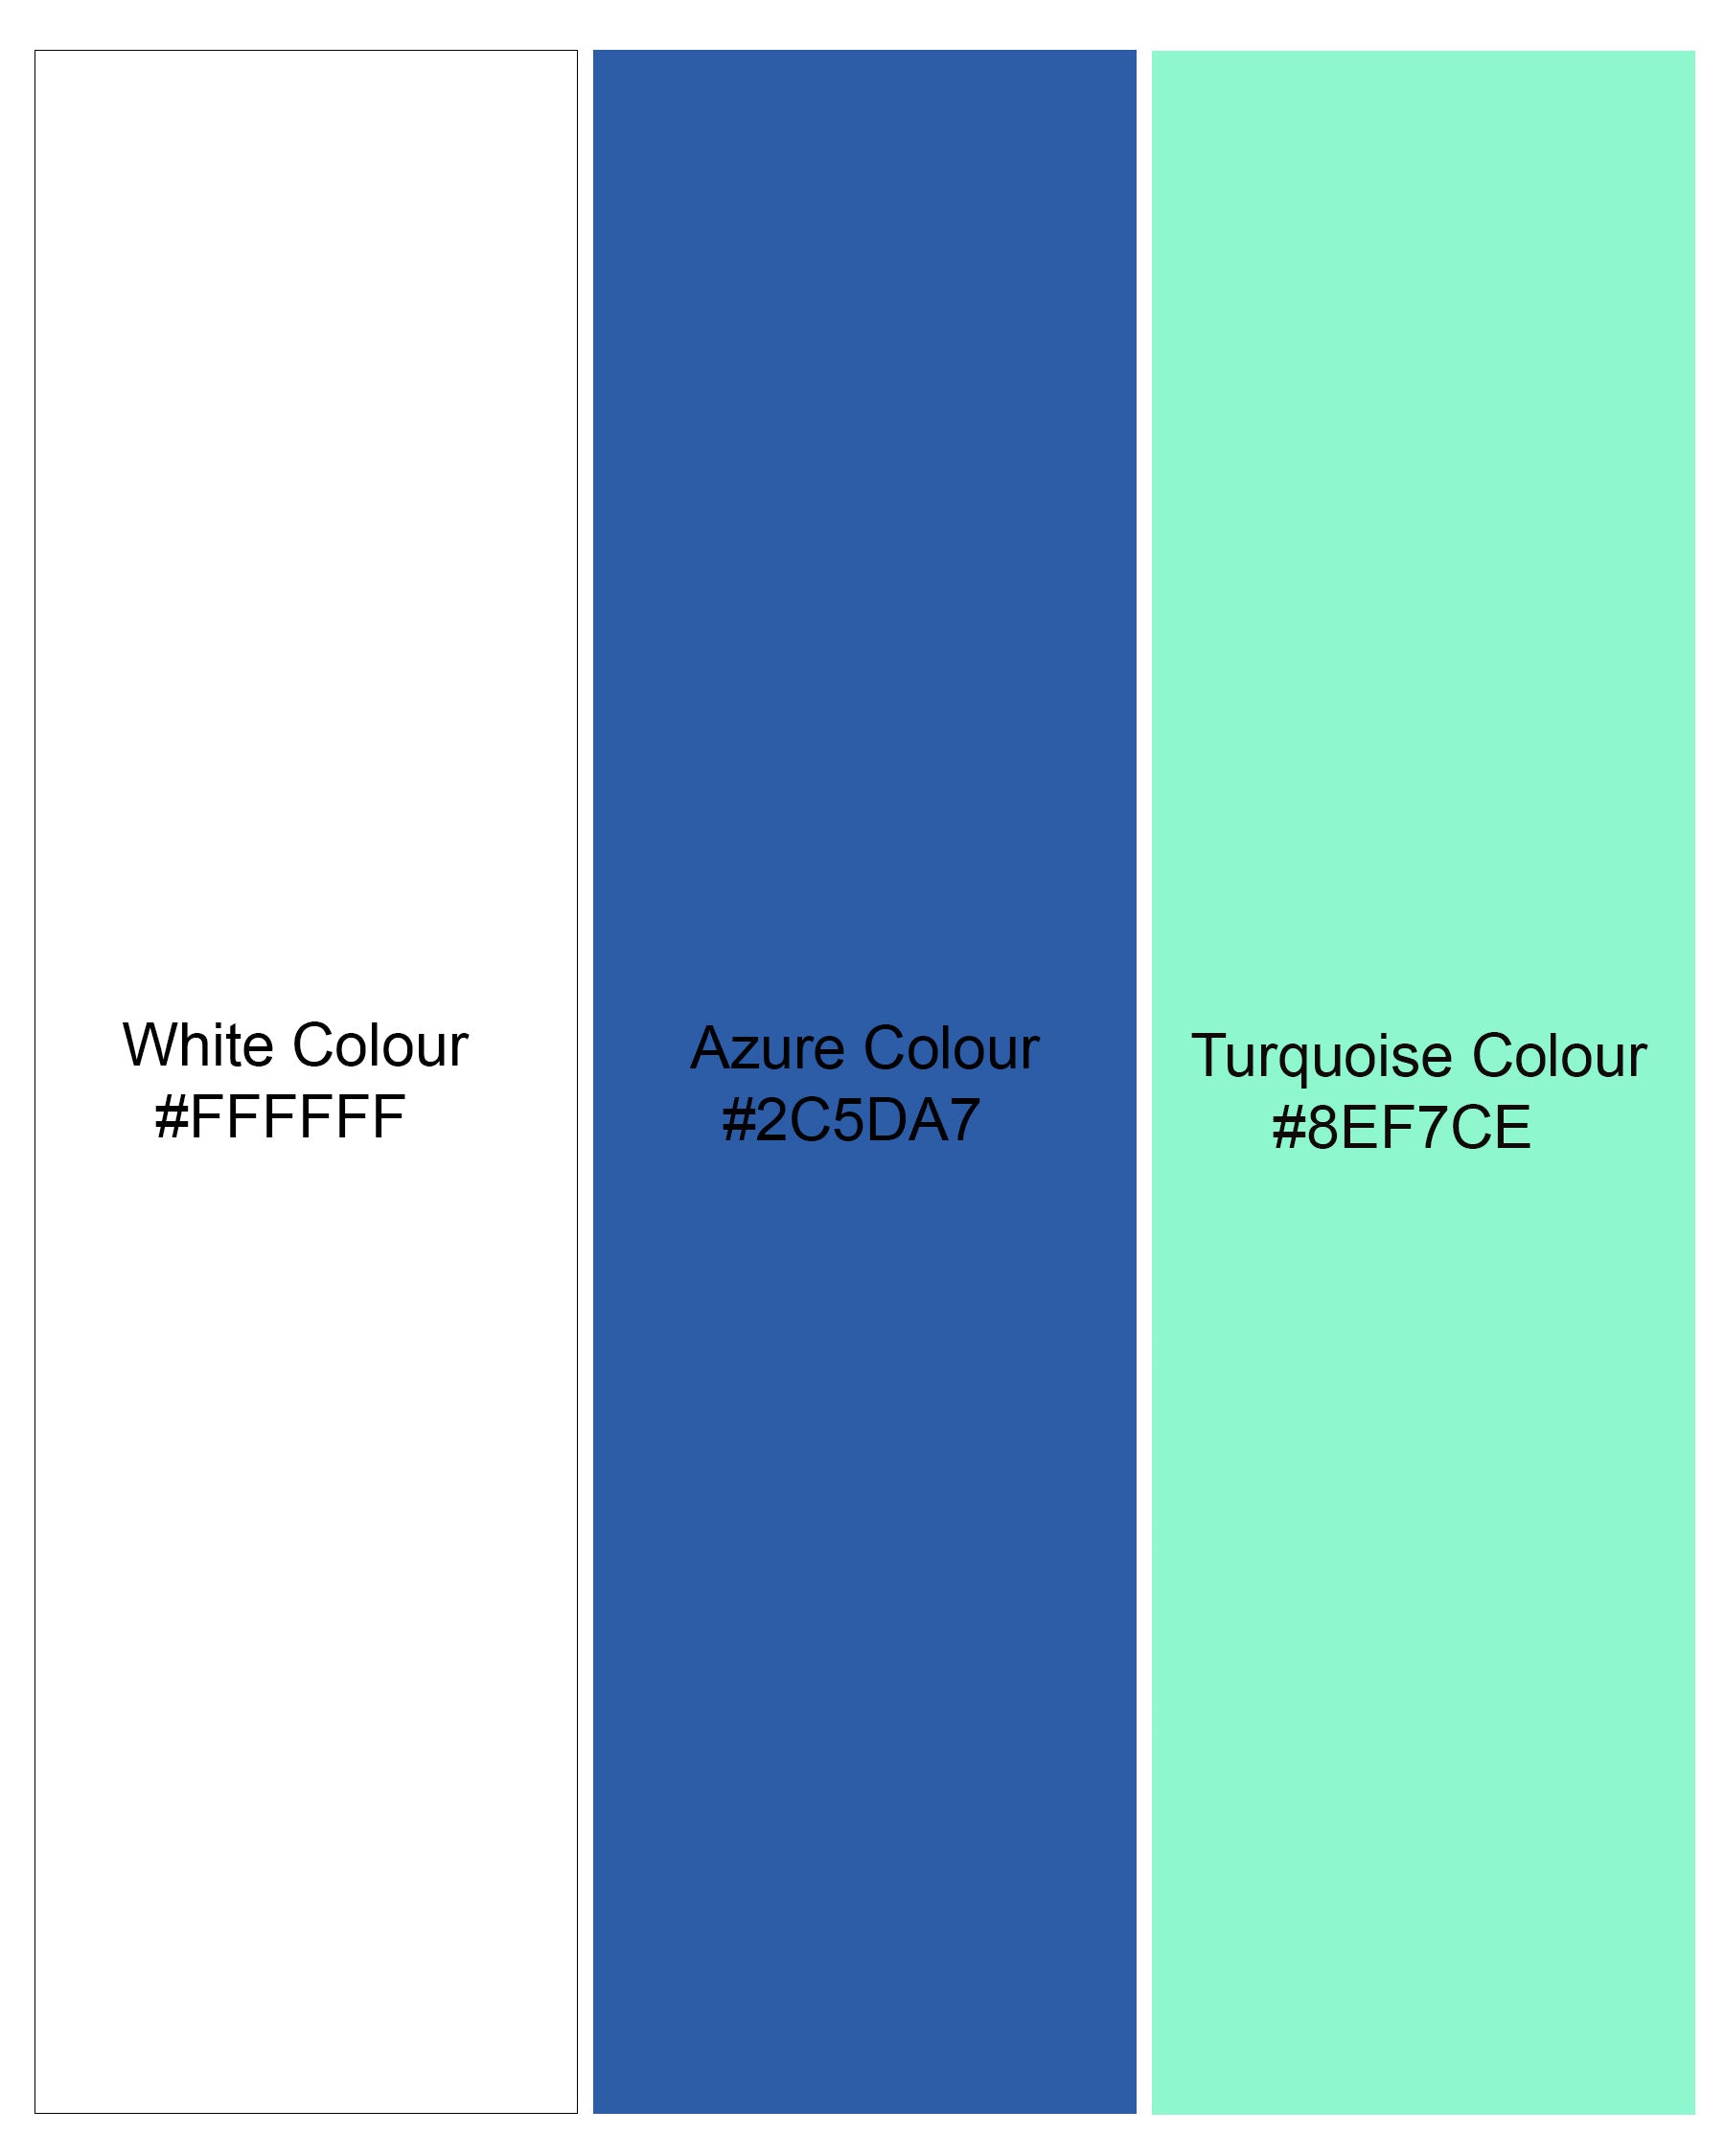 Bright White with Azure Blue and Turquoise Green Checkered Premium Cotton Shirt 8130-CA-38, 8130-CA-H-38, 8130-CA-39, 8130-CA-H-39, 8130-CA-40, 8130-CA-H-40, 8130-CA-42, 8130-CA-H-42, 8130-CA-44, 8130-CA-H-44, 8130-CA-46, 8130-CA-H-46, 8130-CA-48, 8130-CA-H-48, 8130-CA-50, 8130-CA-H-50, 8130-CA-52, 8130-CA-H-52